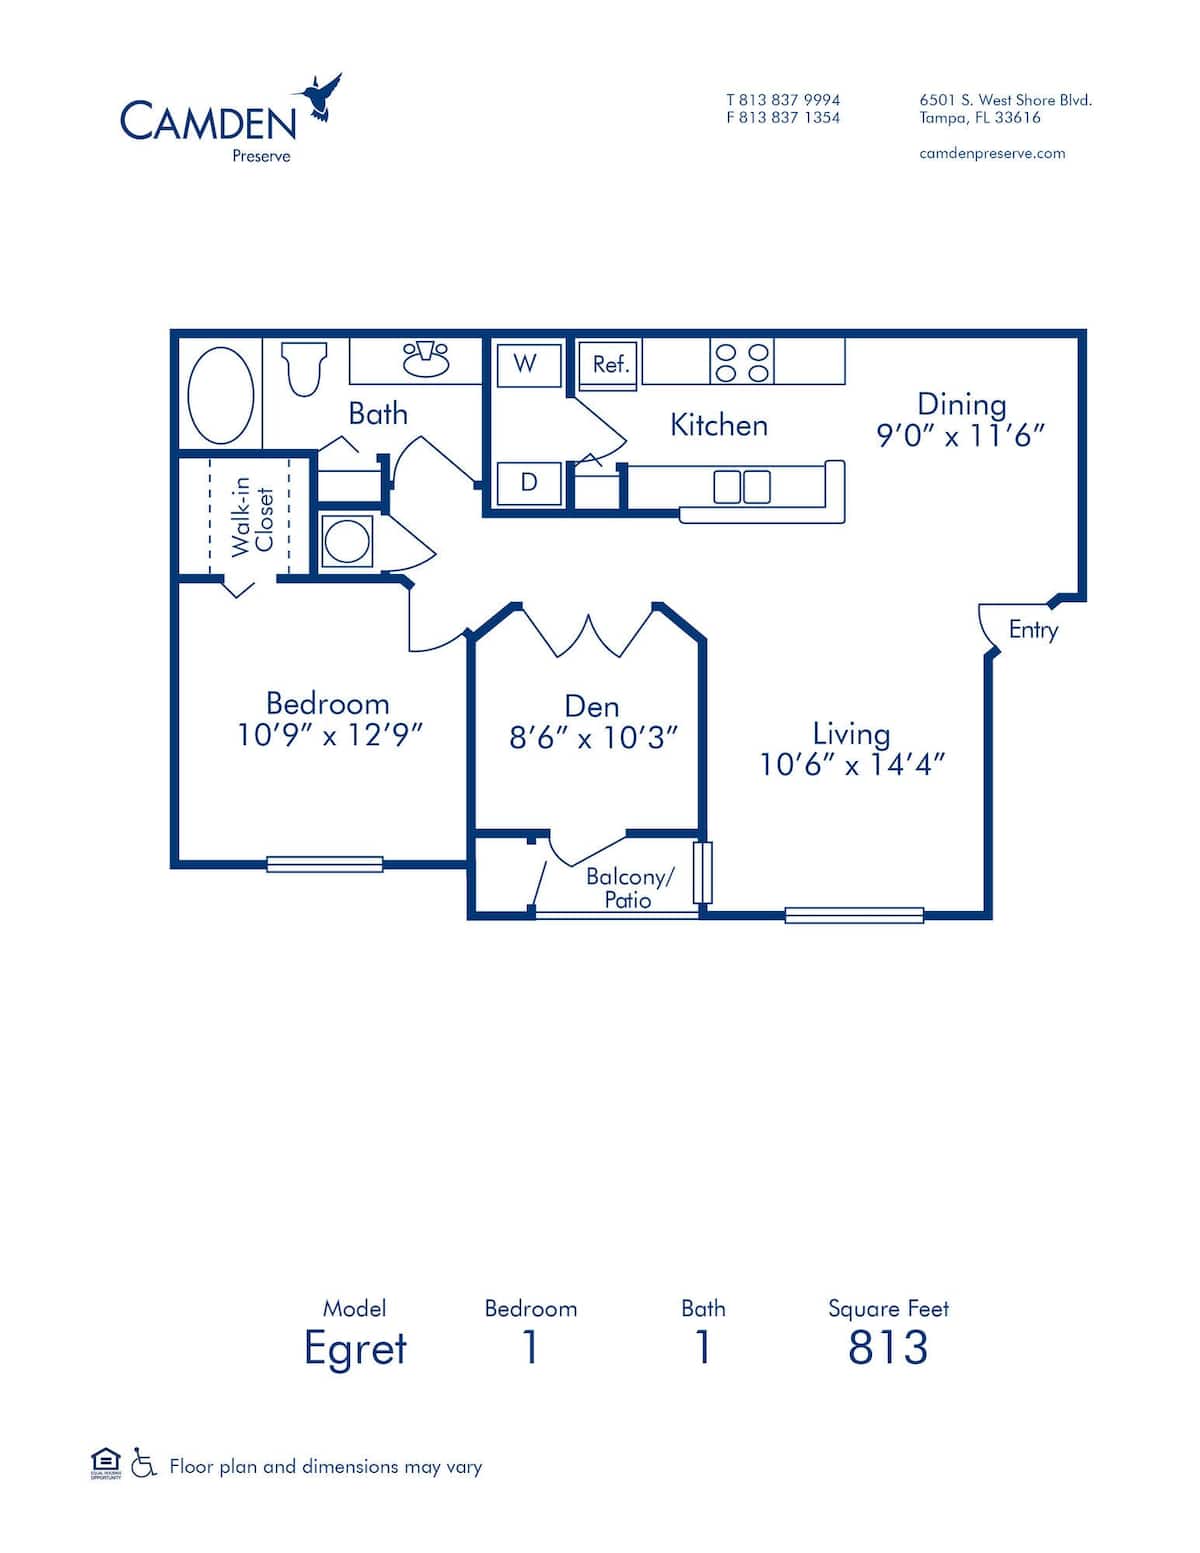 Floorplan diagram for Egret, showing 1 bedroom